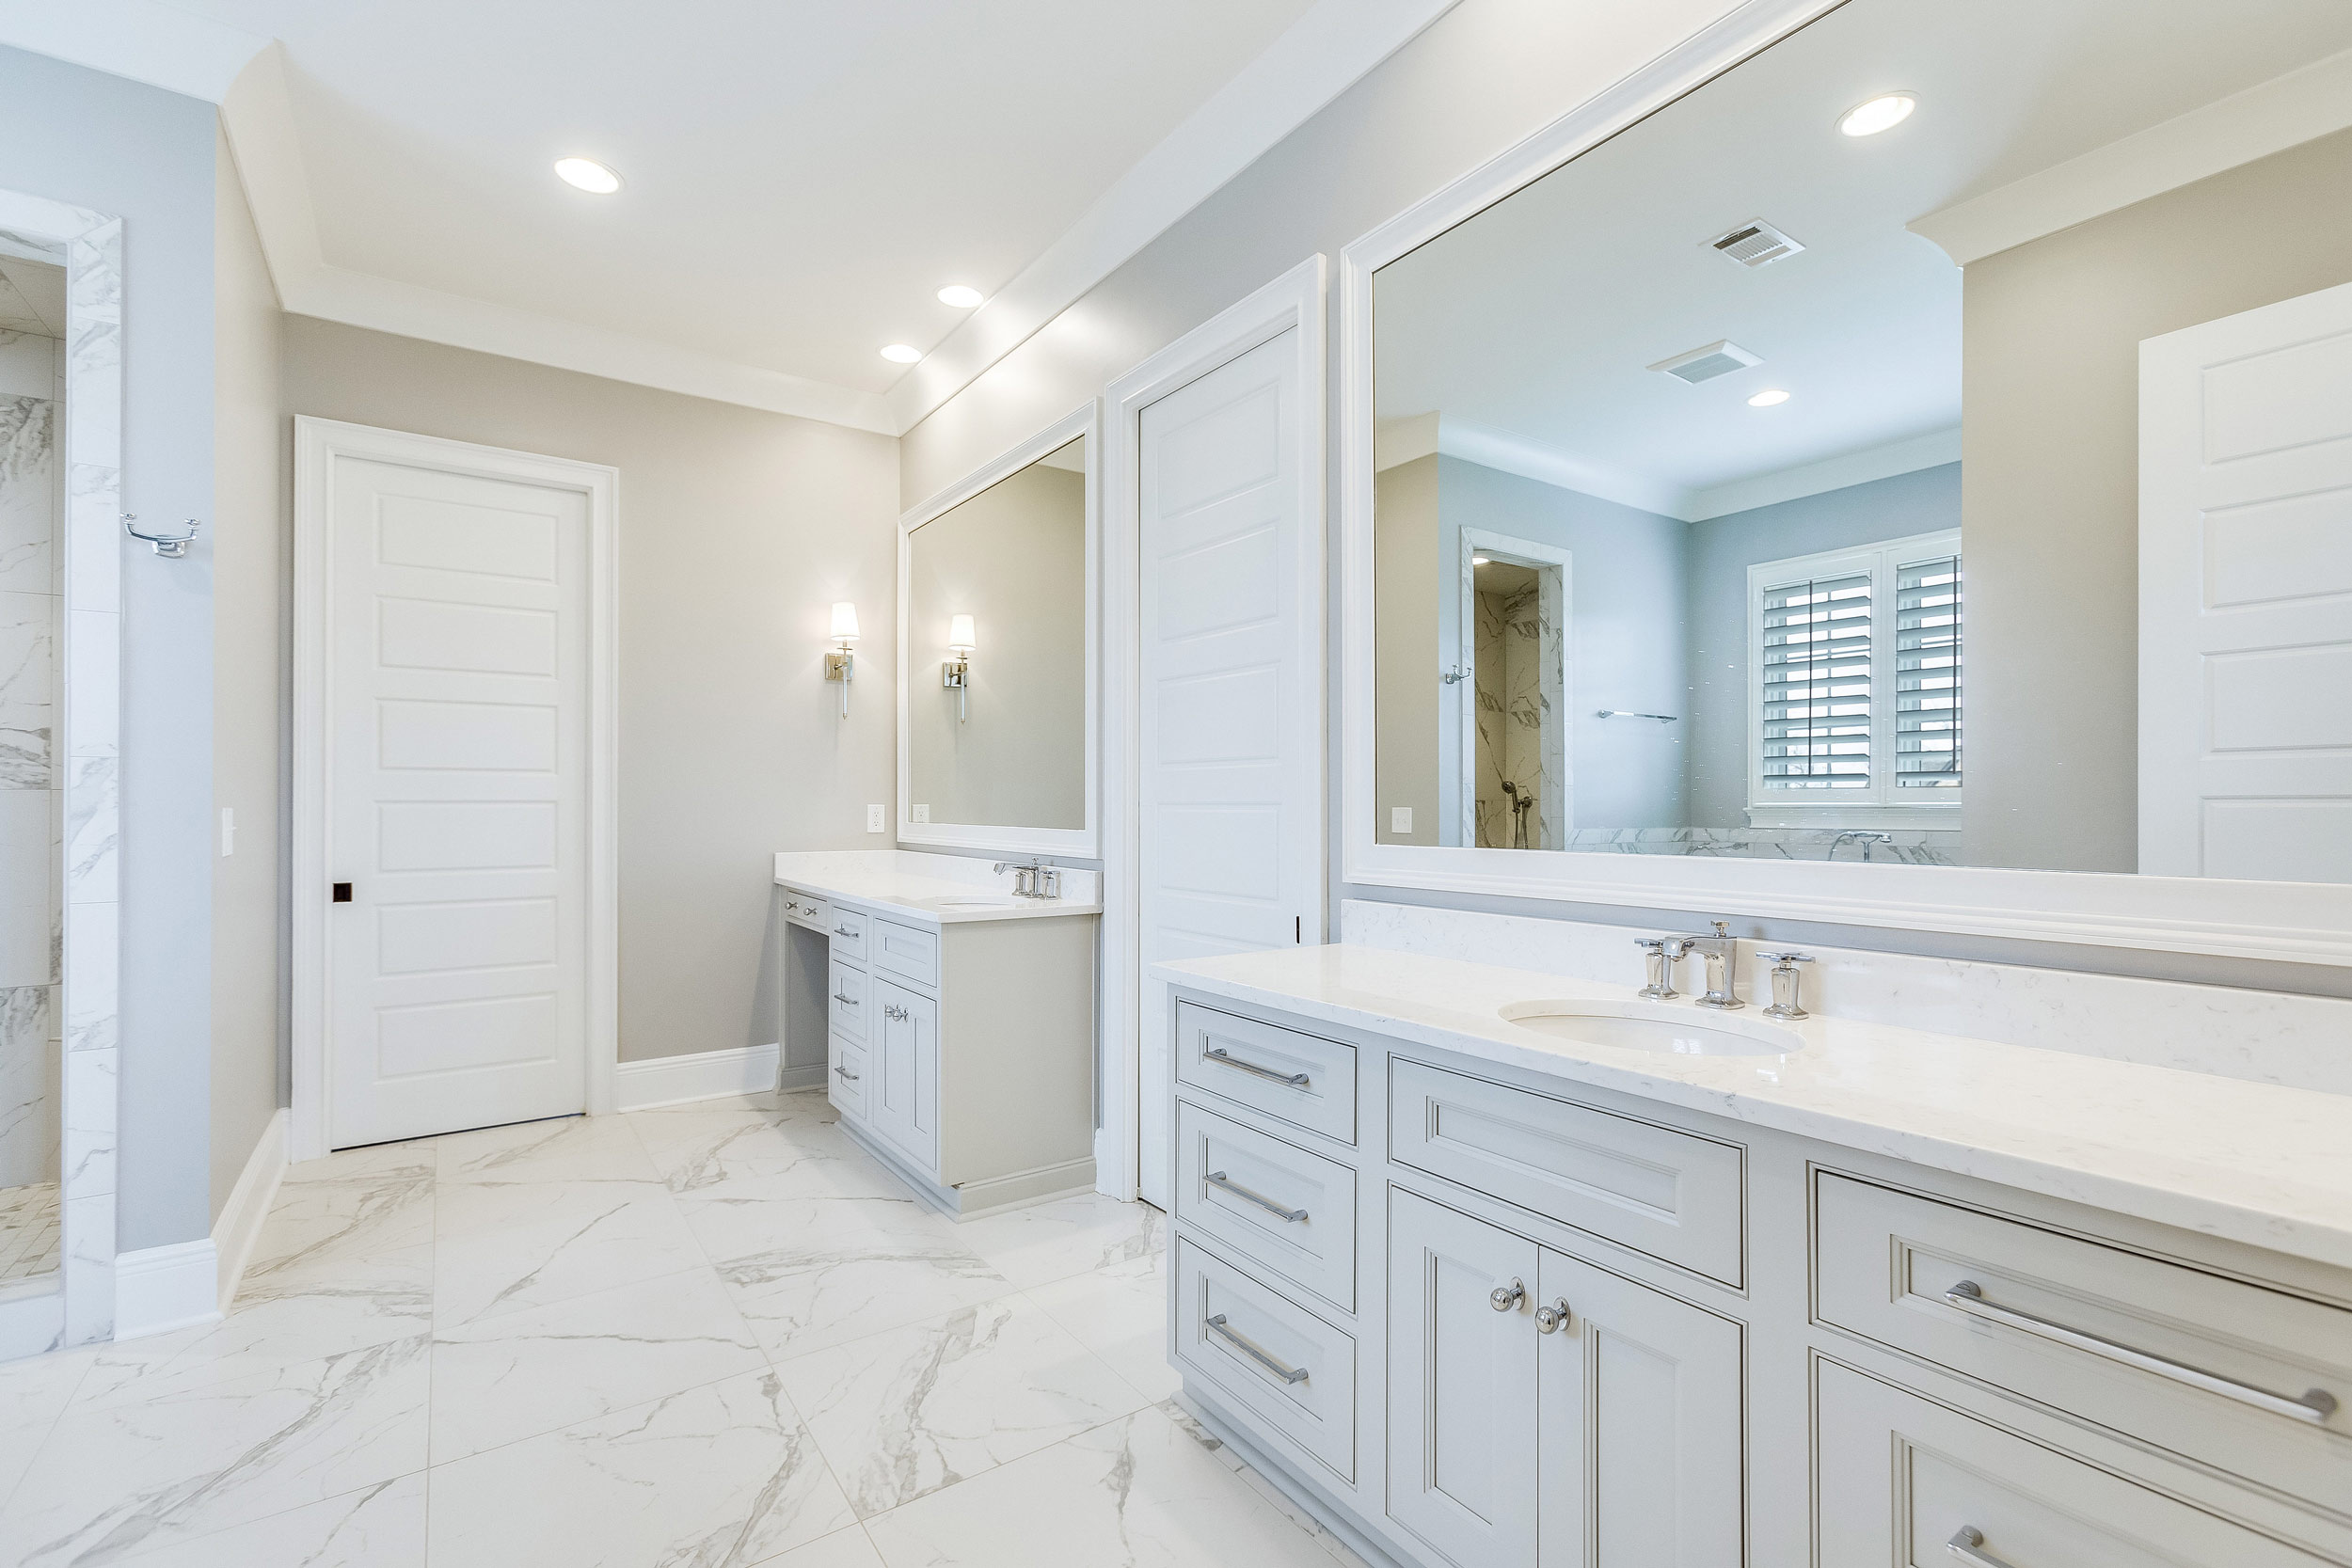 bathroom lighting design tips when remodeling — toulmin kitchen